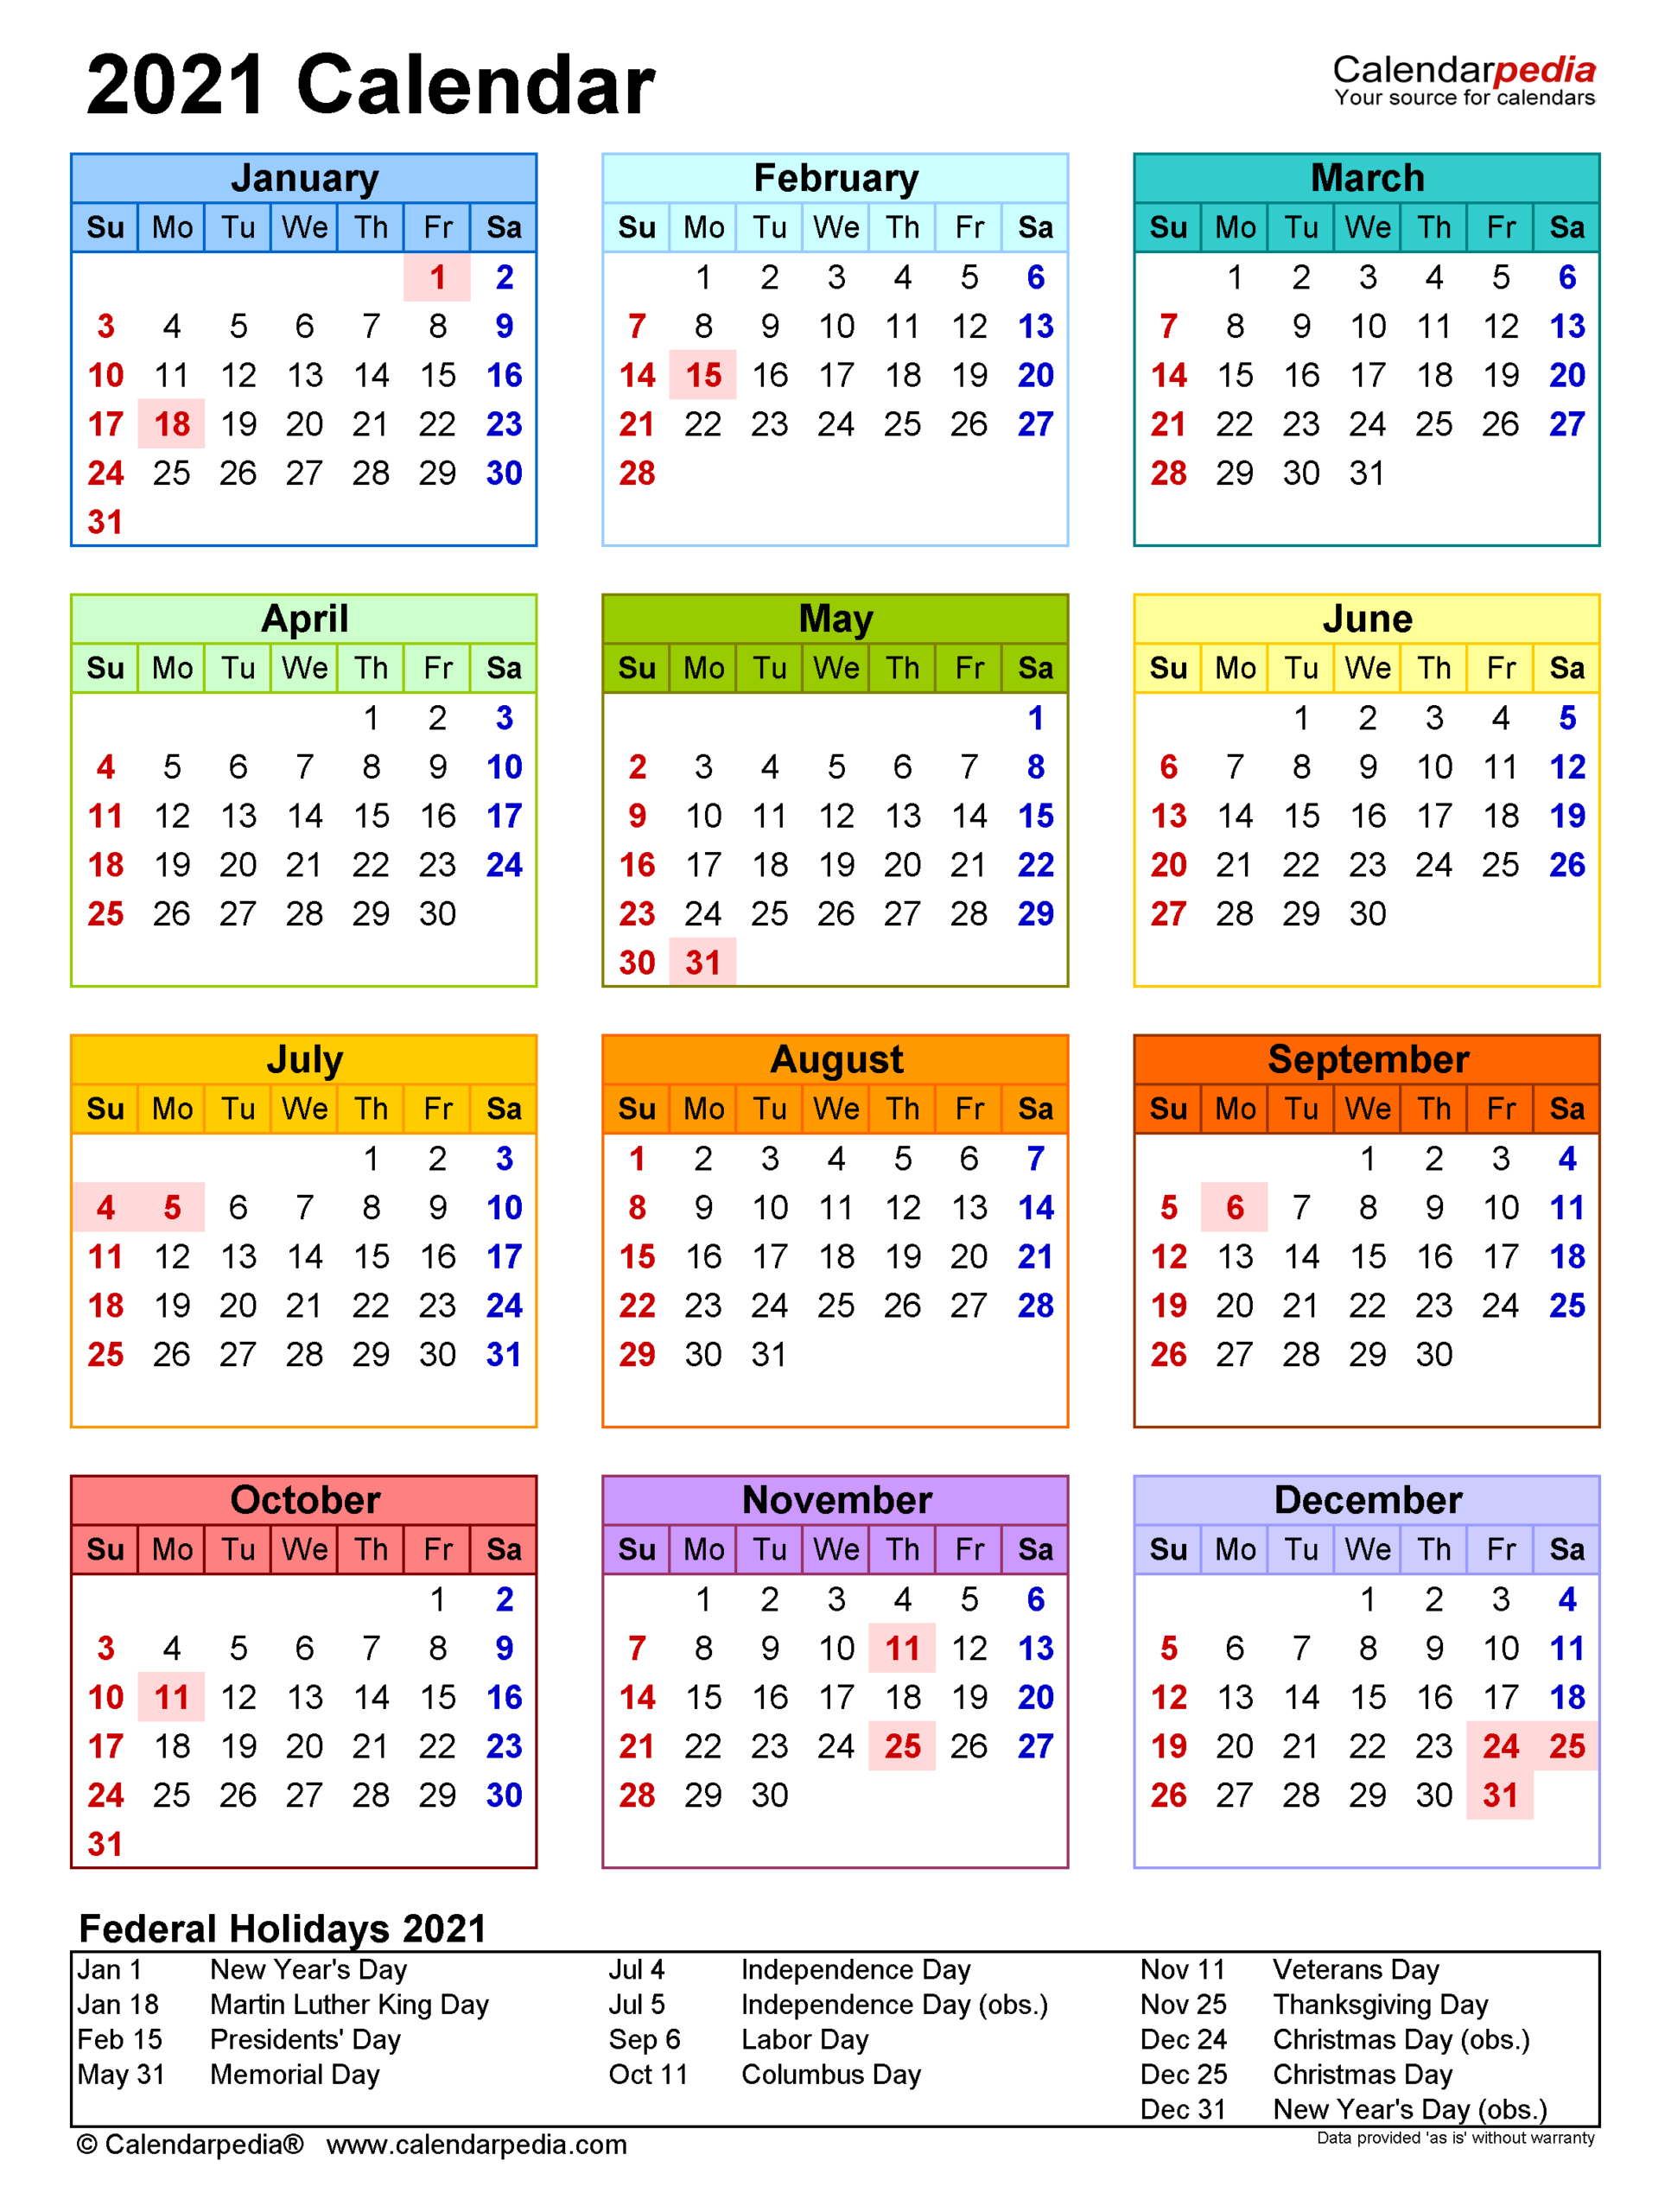 2021 Calendar - Free Printable Excel Templates - Calendarpedia-Microsoft Calendar Templates 2021